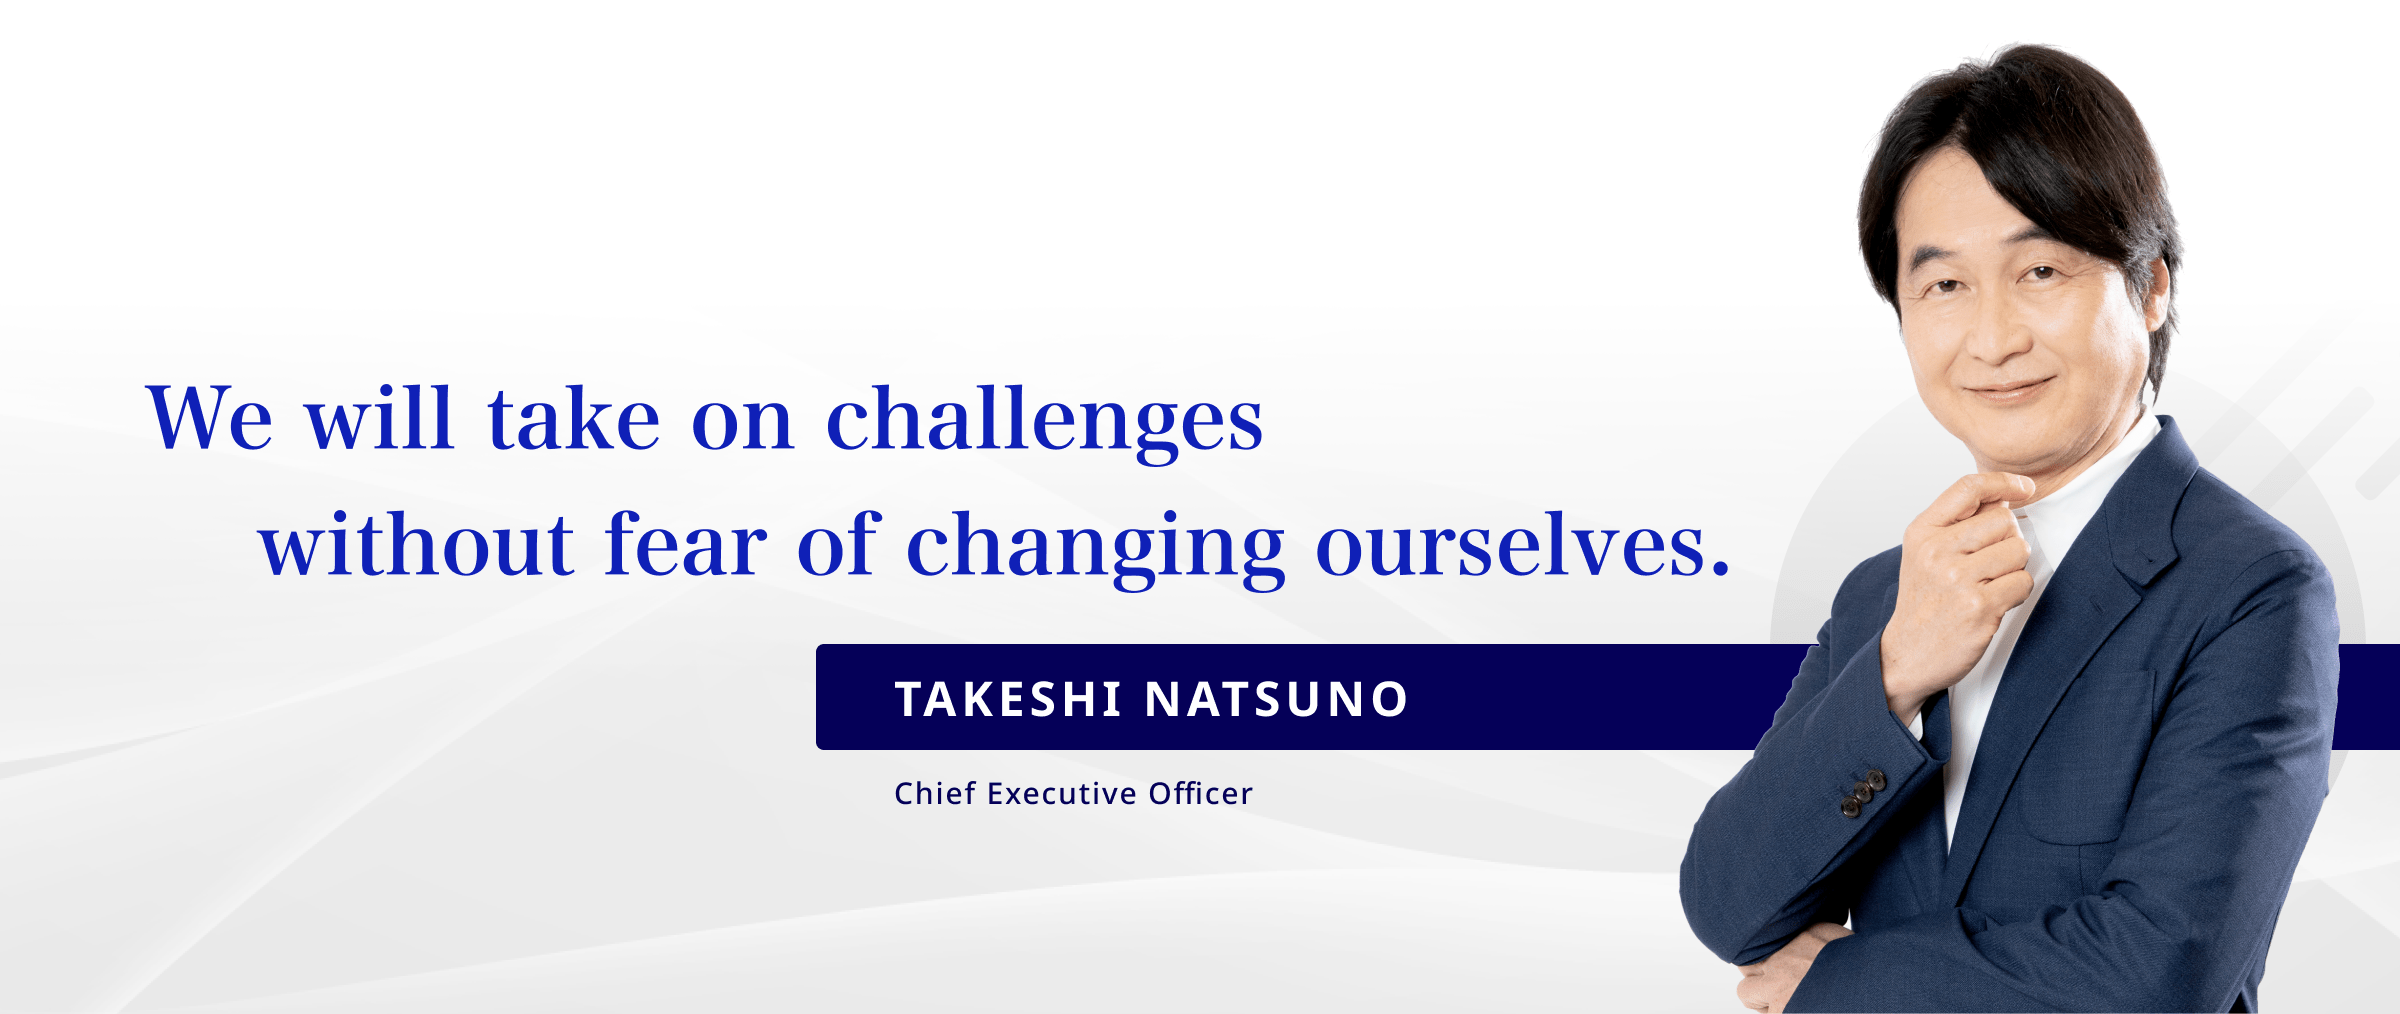 Chief Executive Officer/Takeshi Natsuno